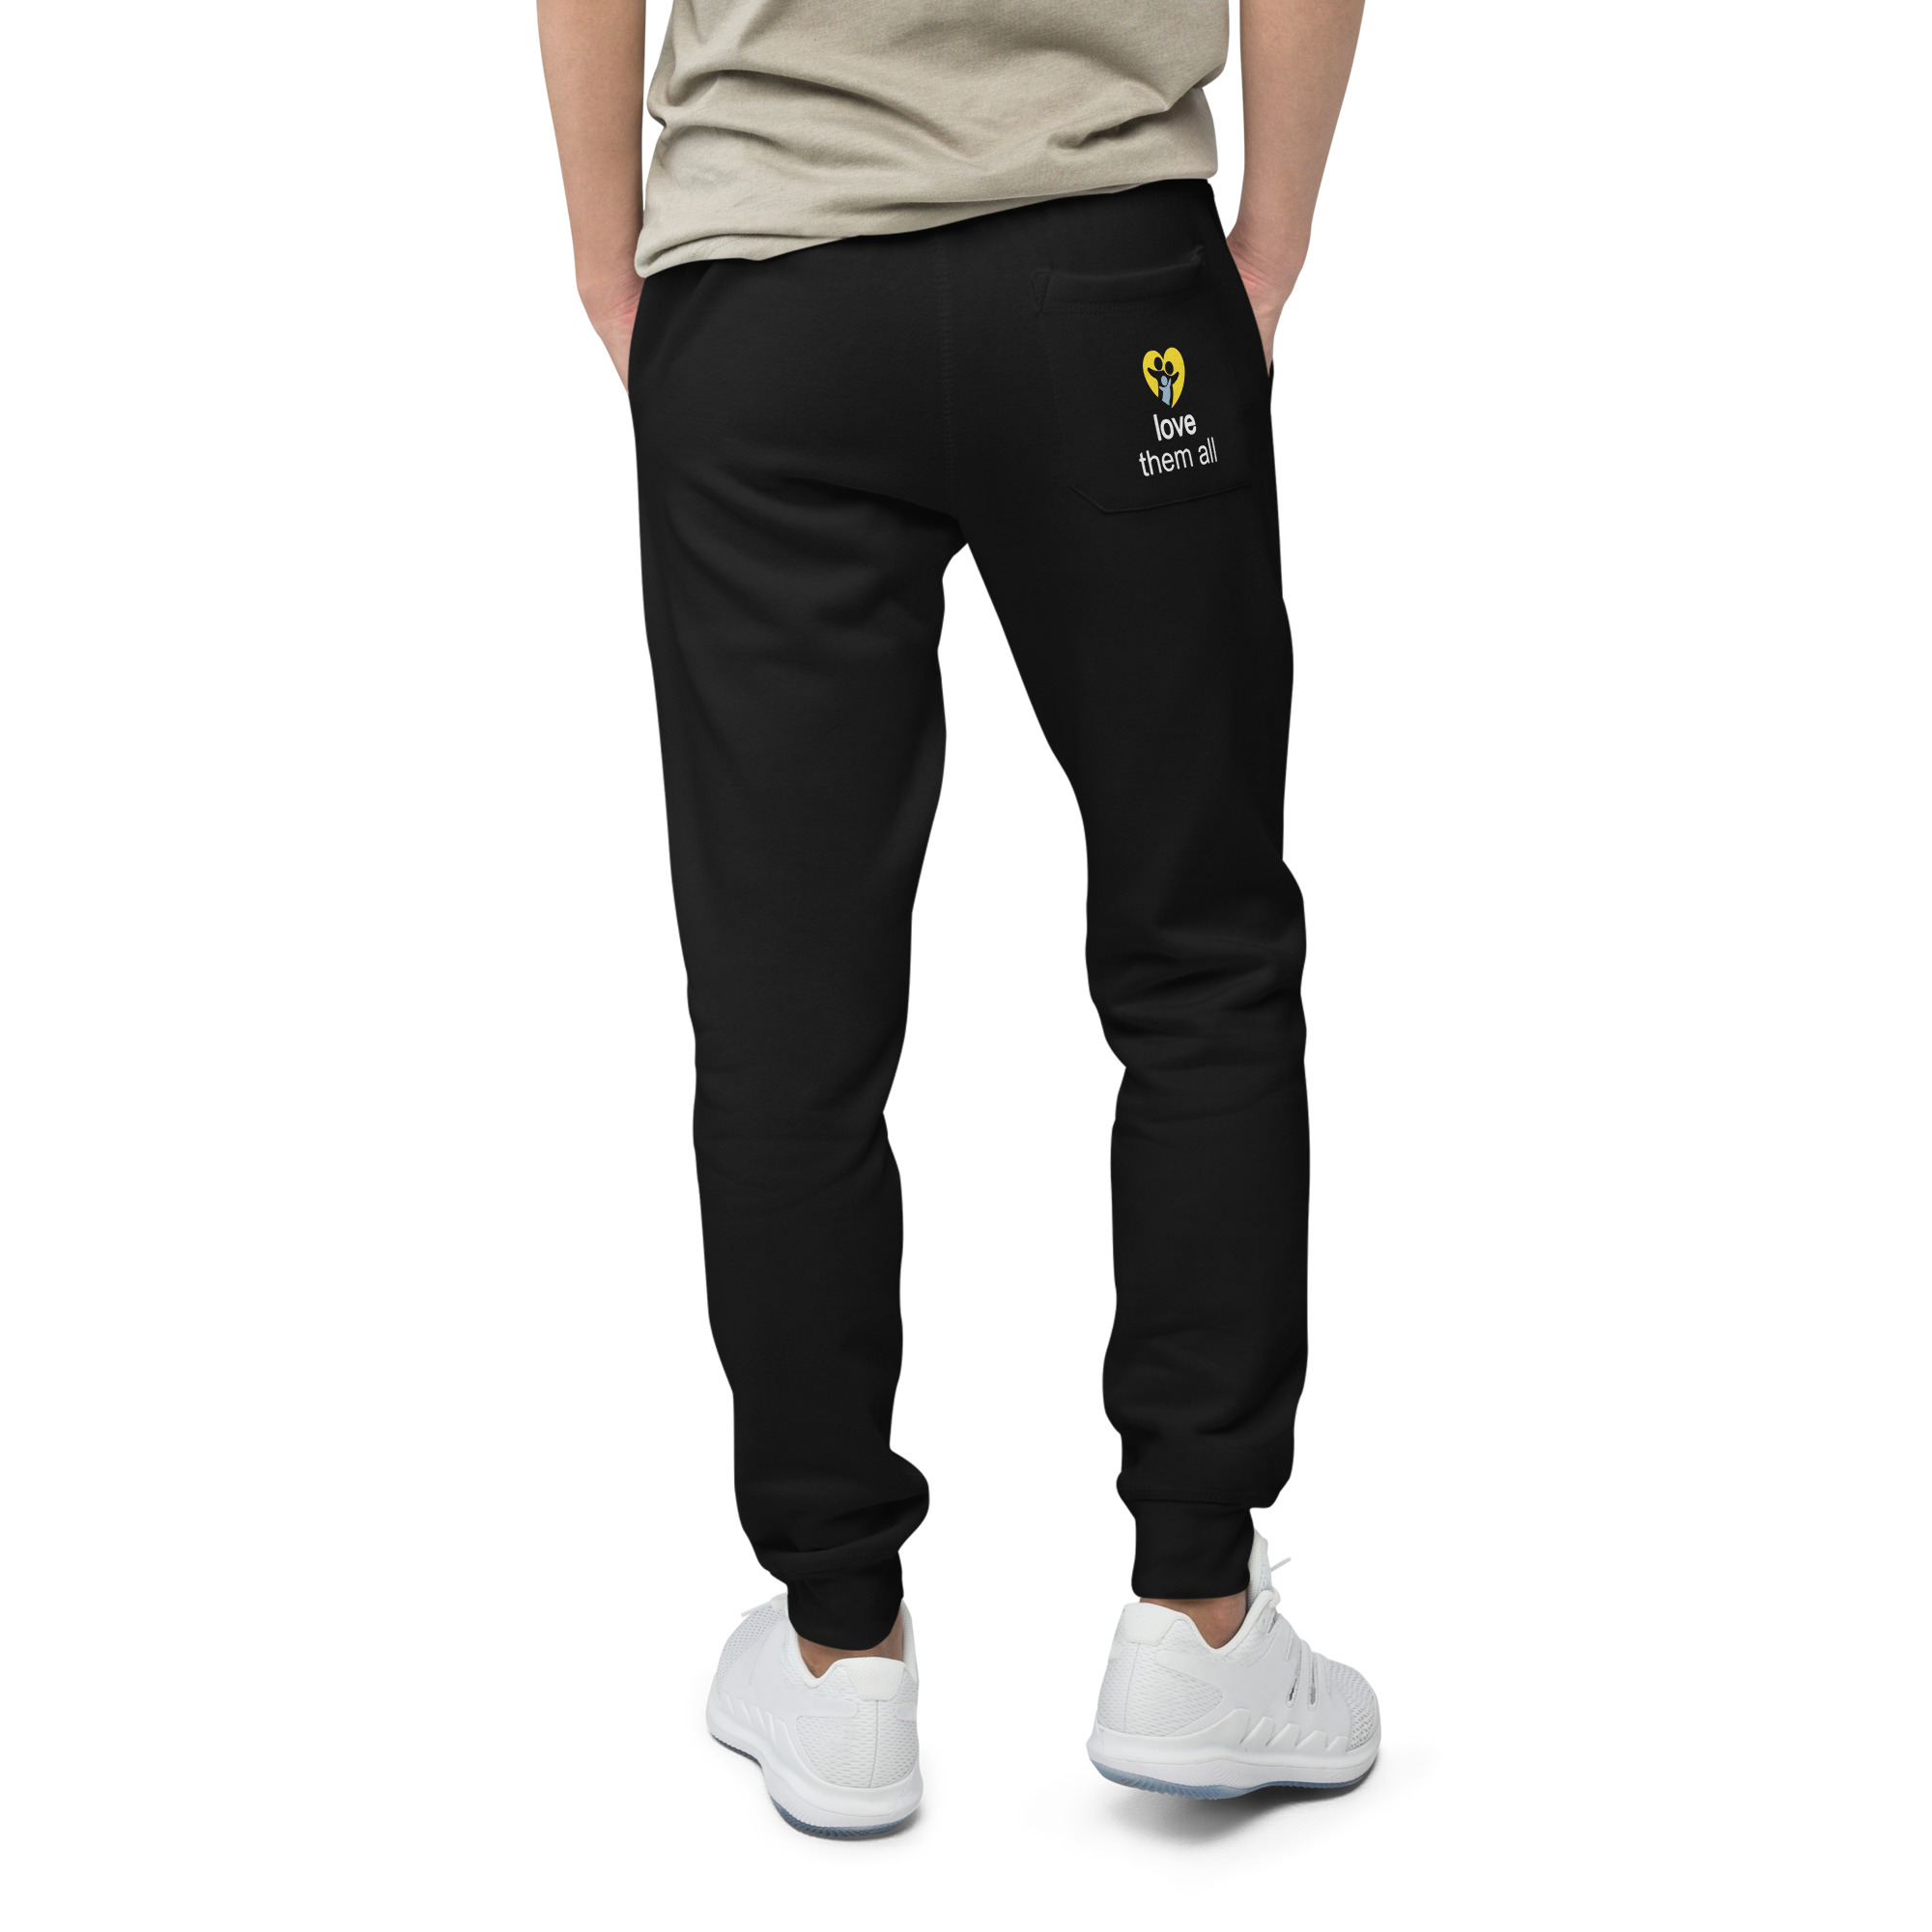 Unisex fleece sweatpants (Logo on back pocket)